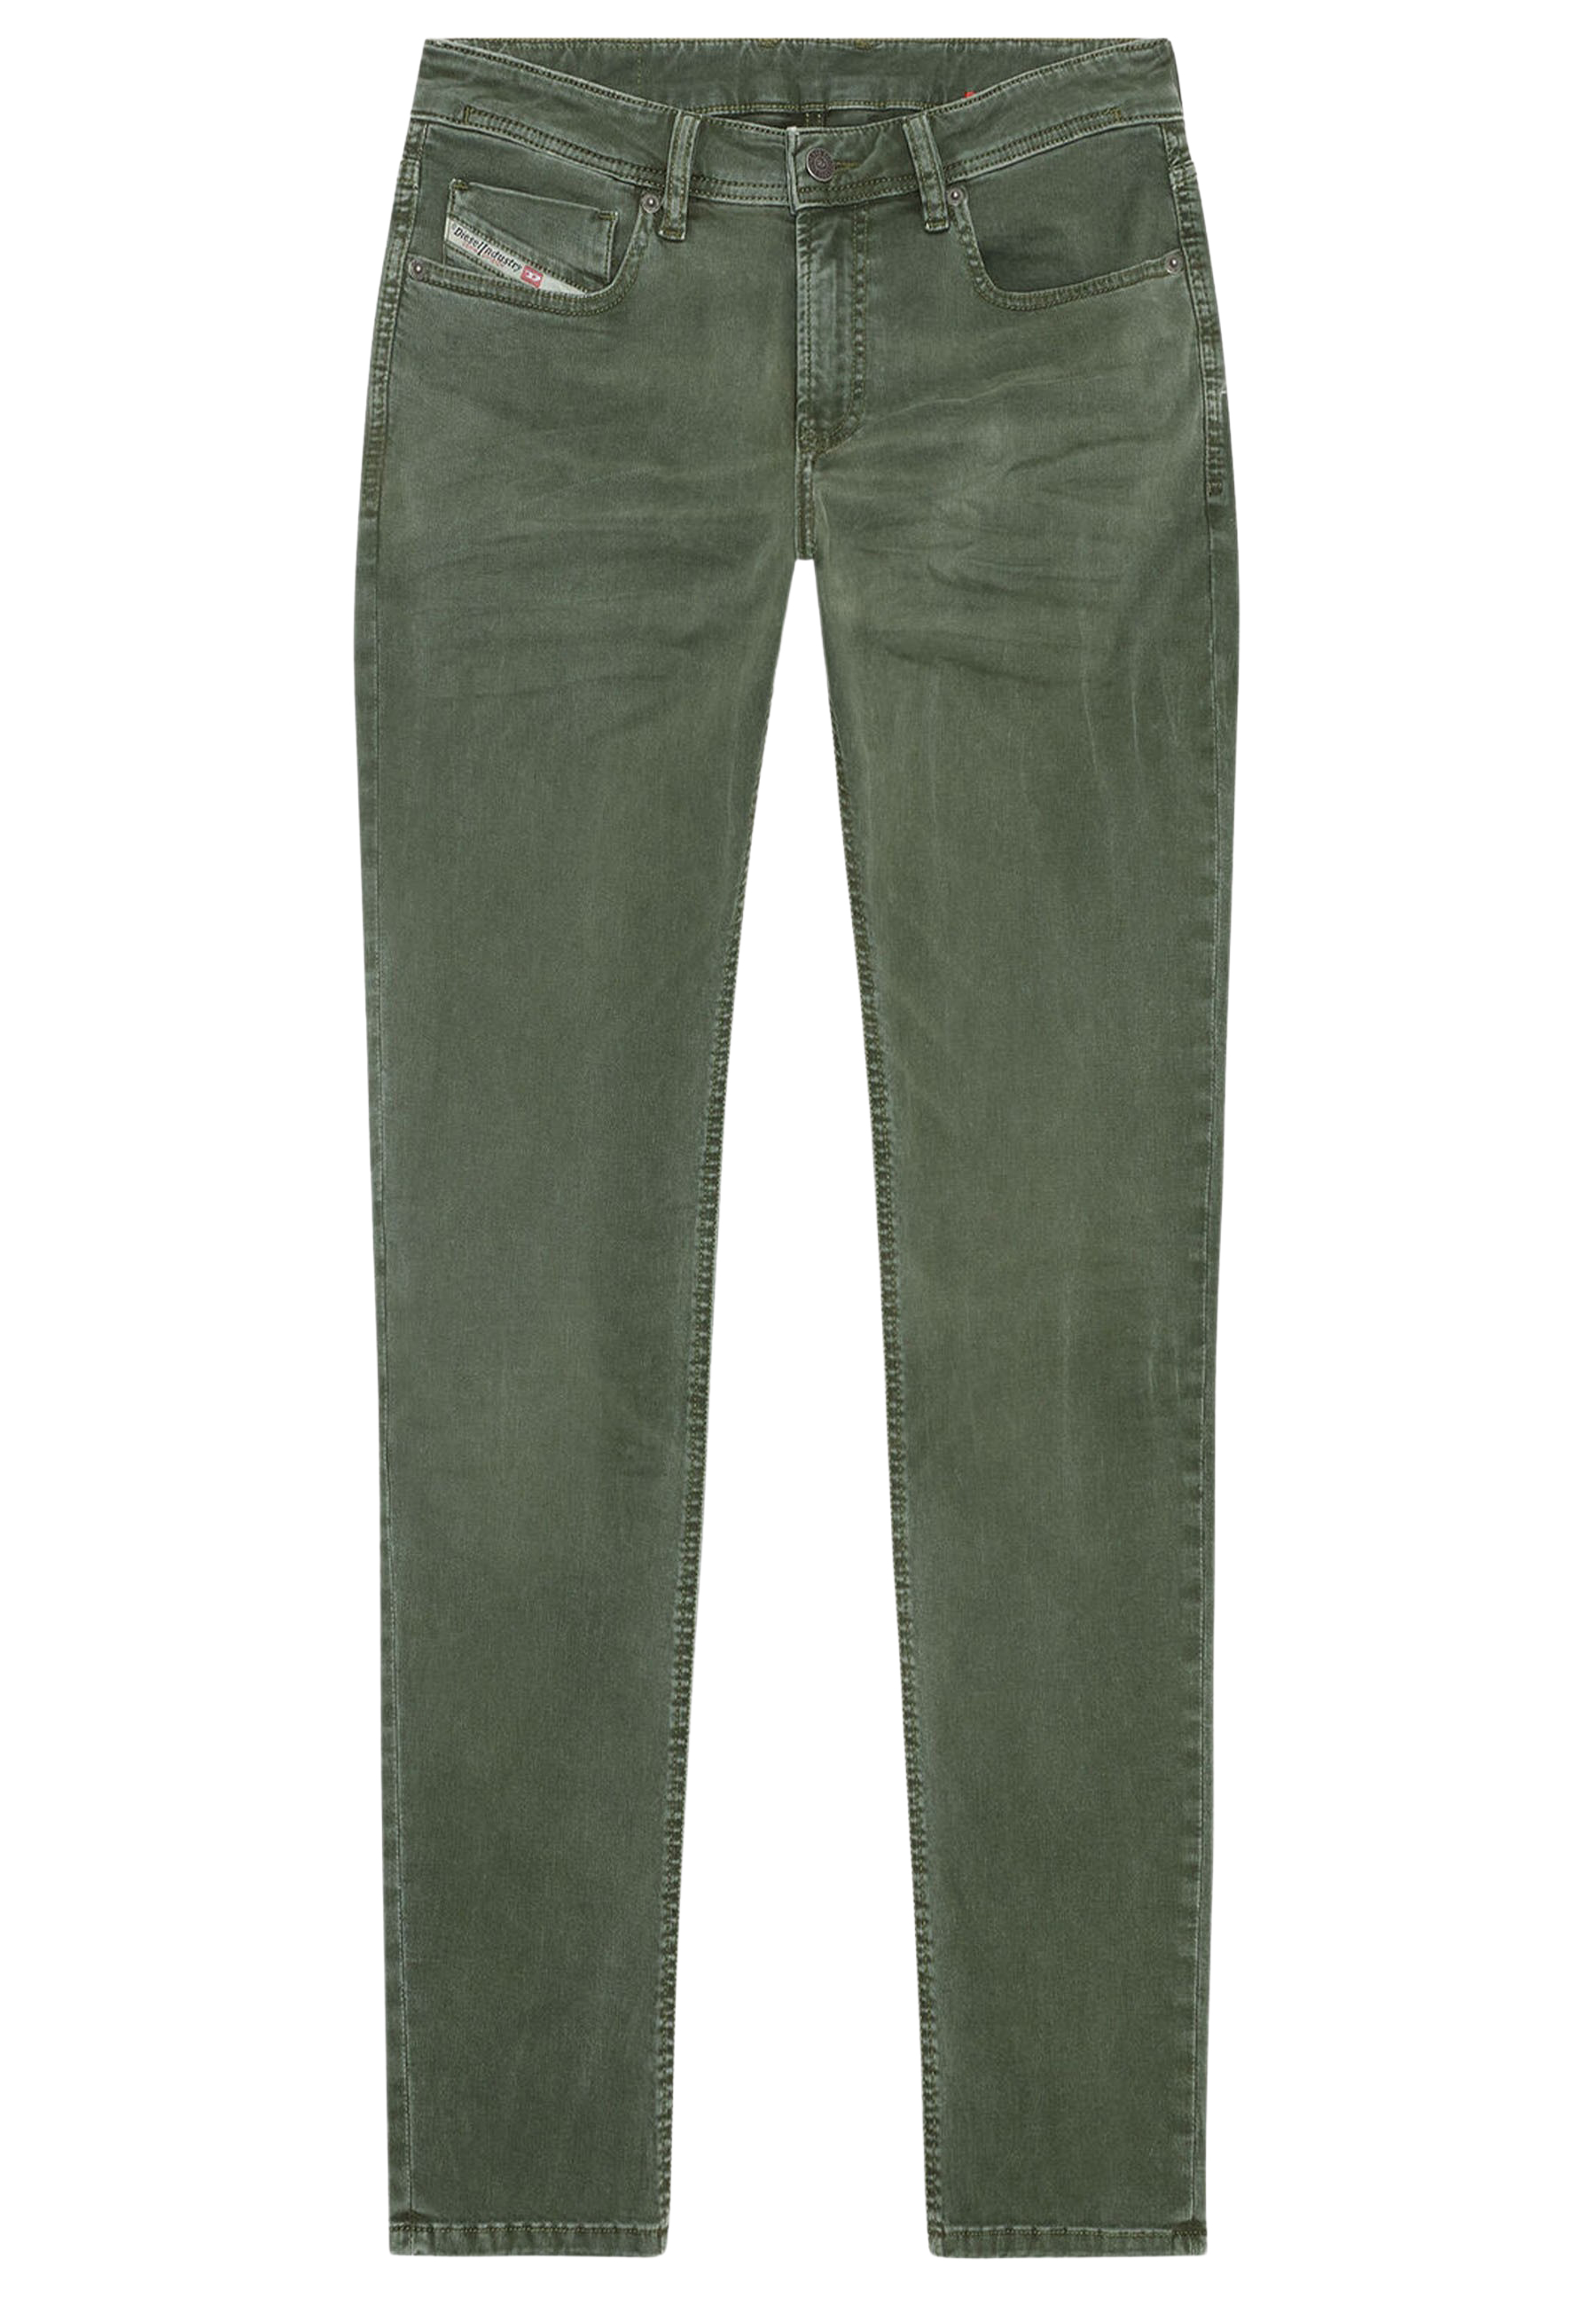 Diesel jeans groen Heren maat 32/34